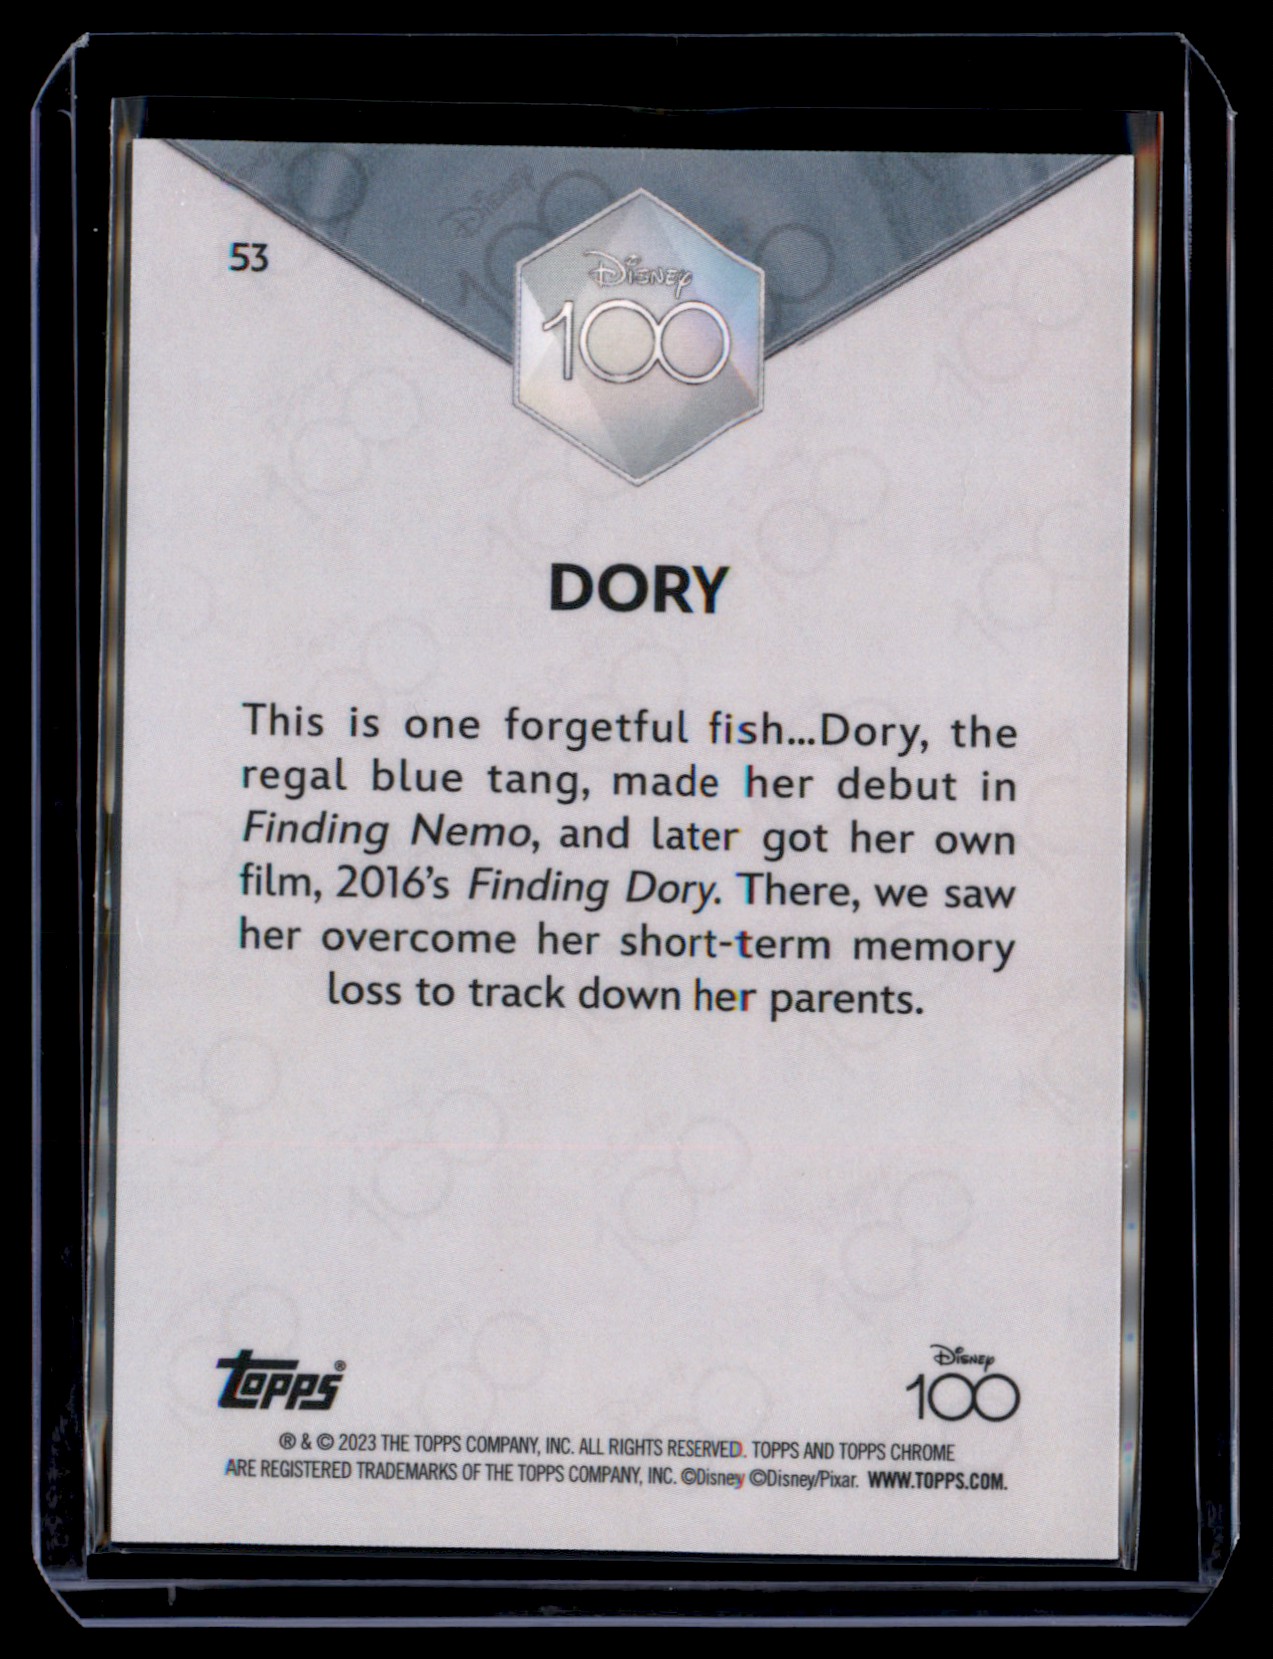 2023 topps disney chrome 100 dory diamond year #53 card back image